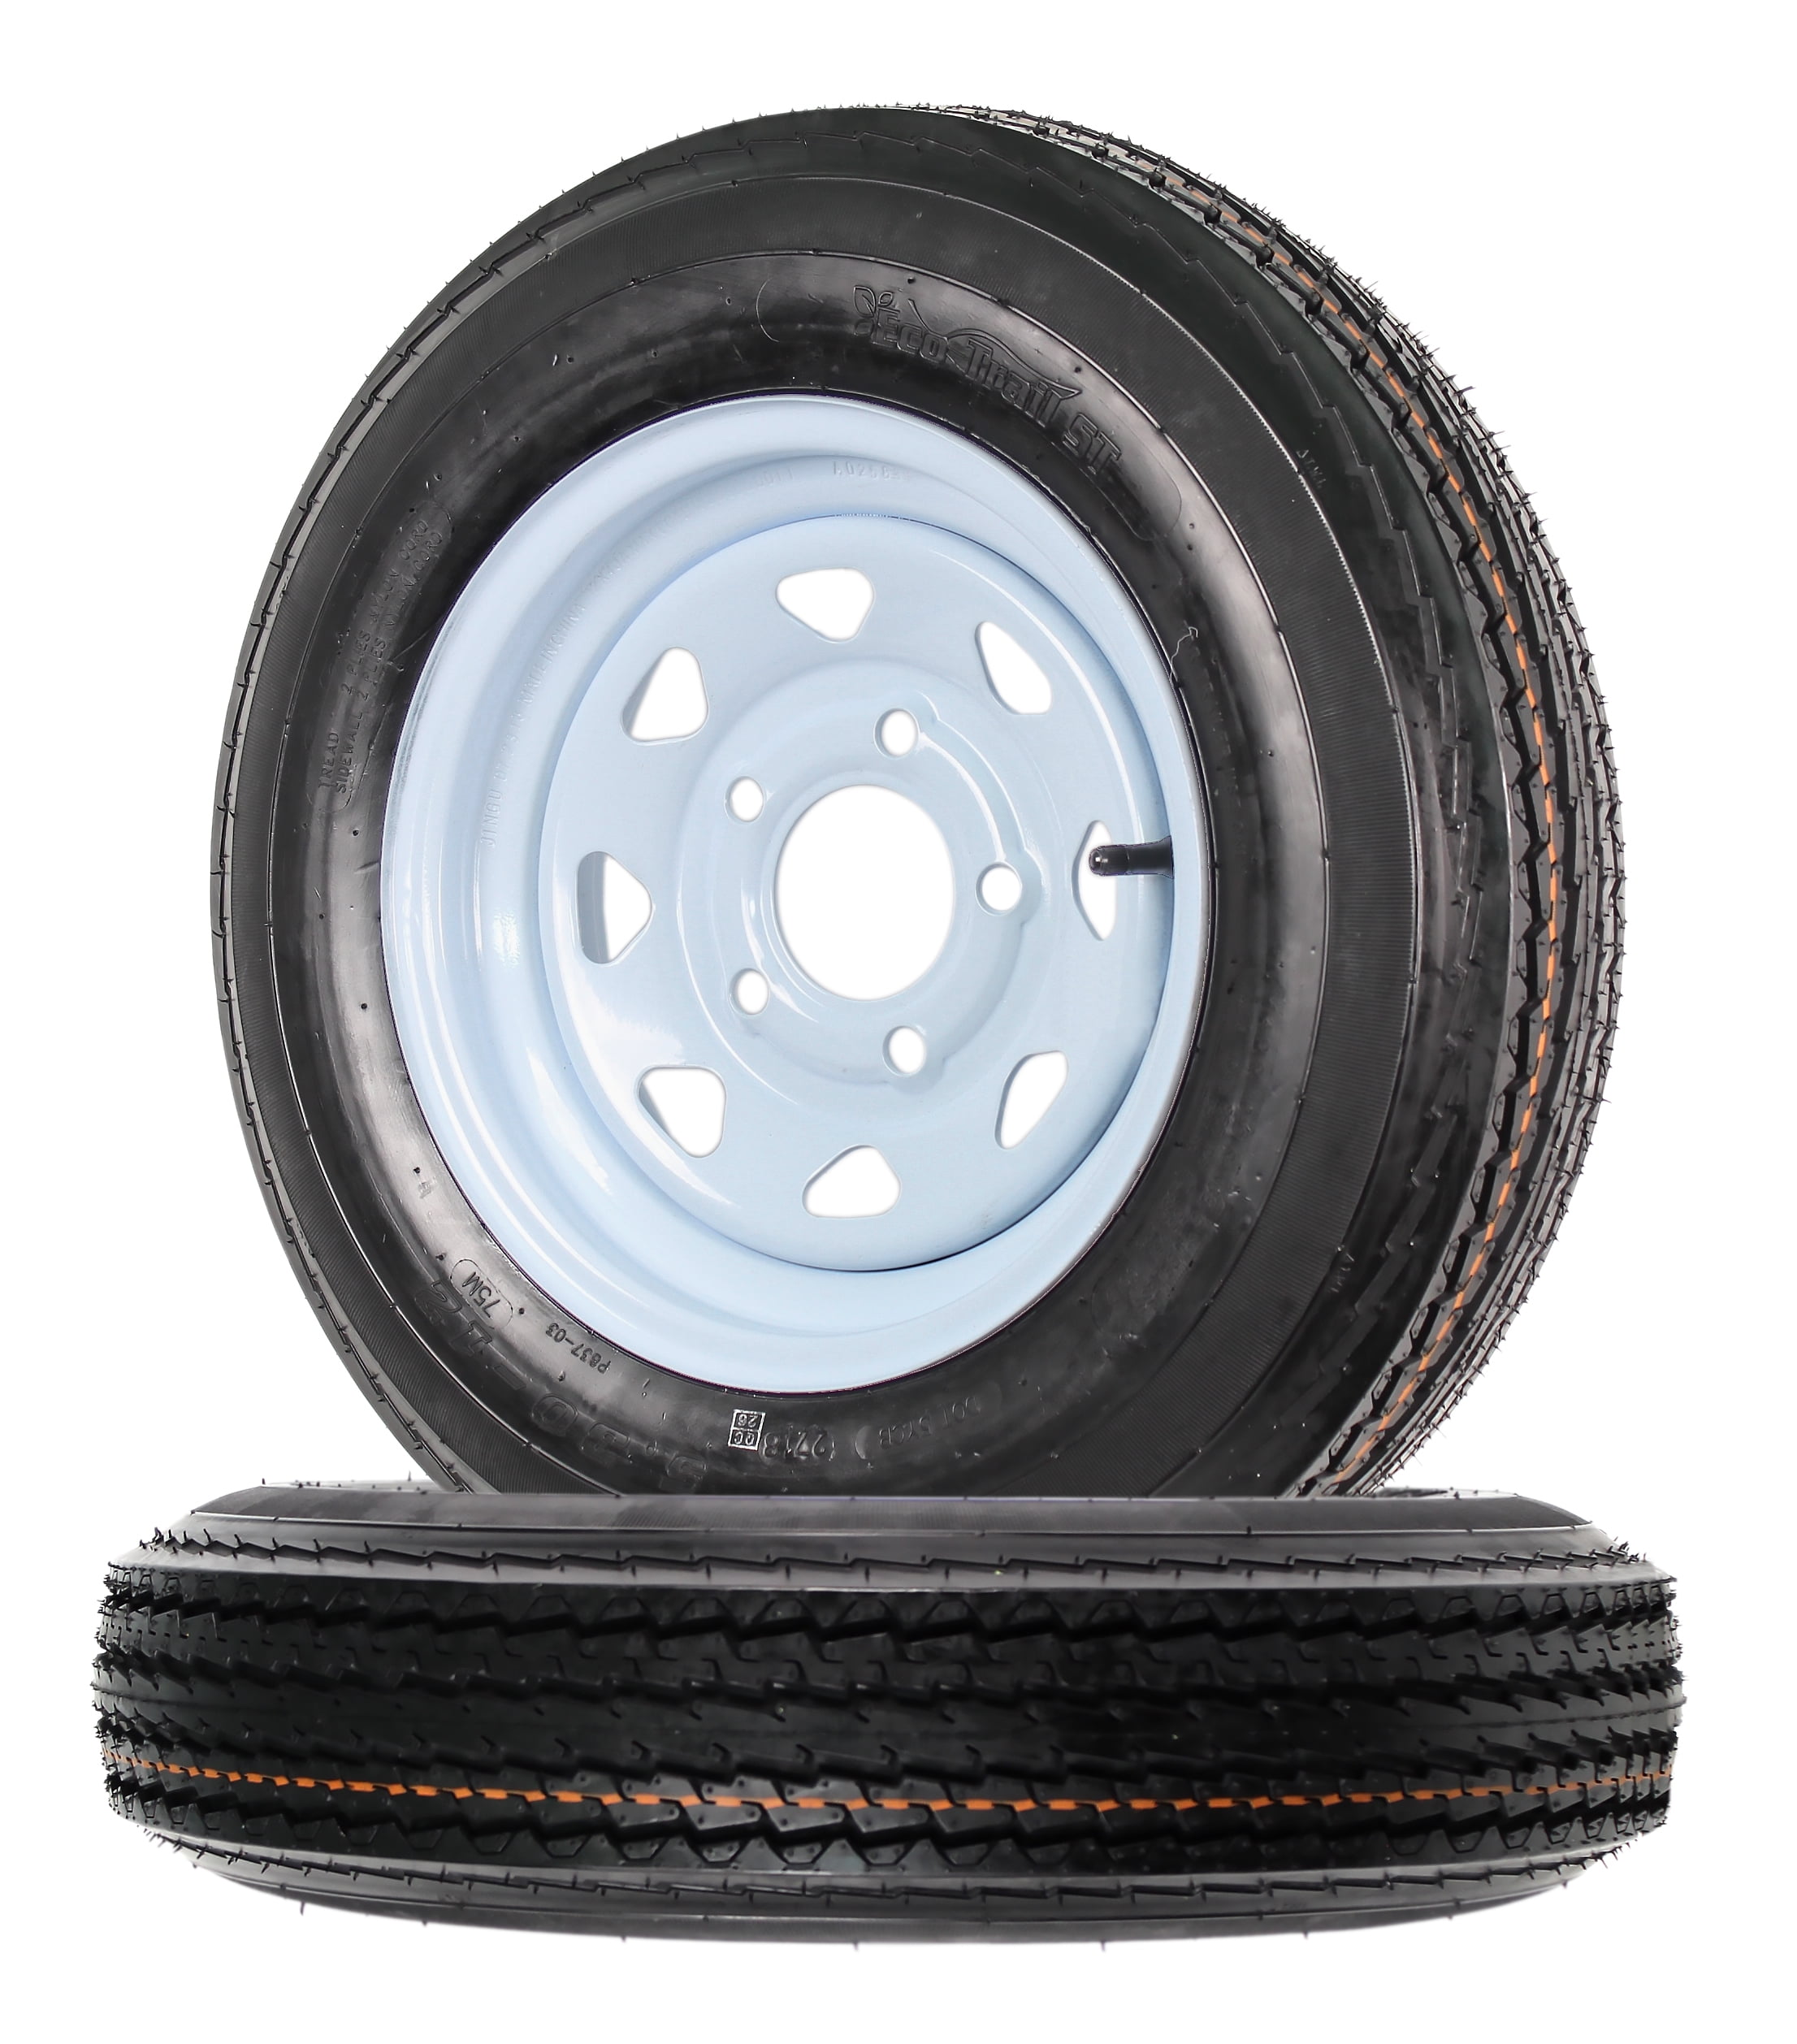 LRB 4 Hole White Spoke 2-Pack Trailer Tire On Rim 530-12 5.30-12 5.30x12 in